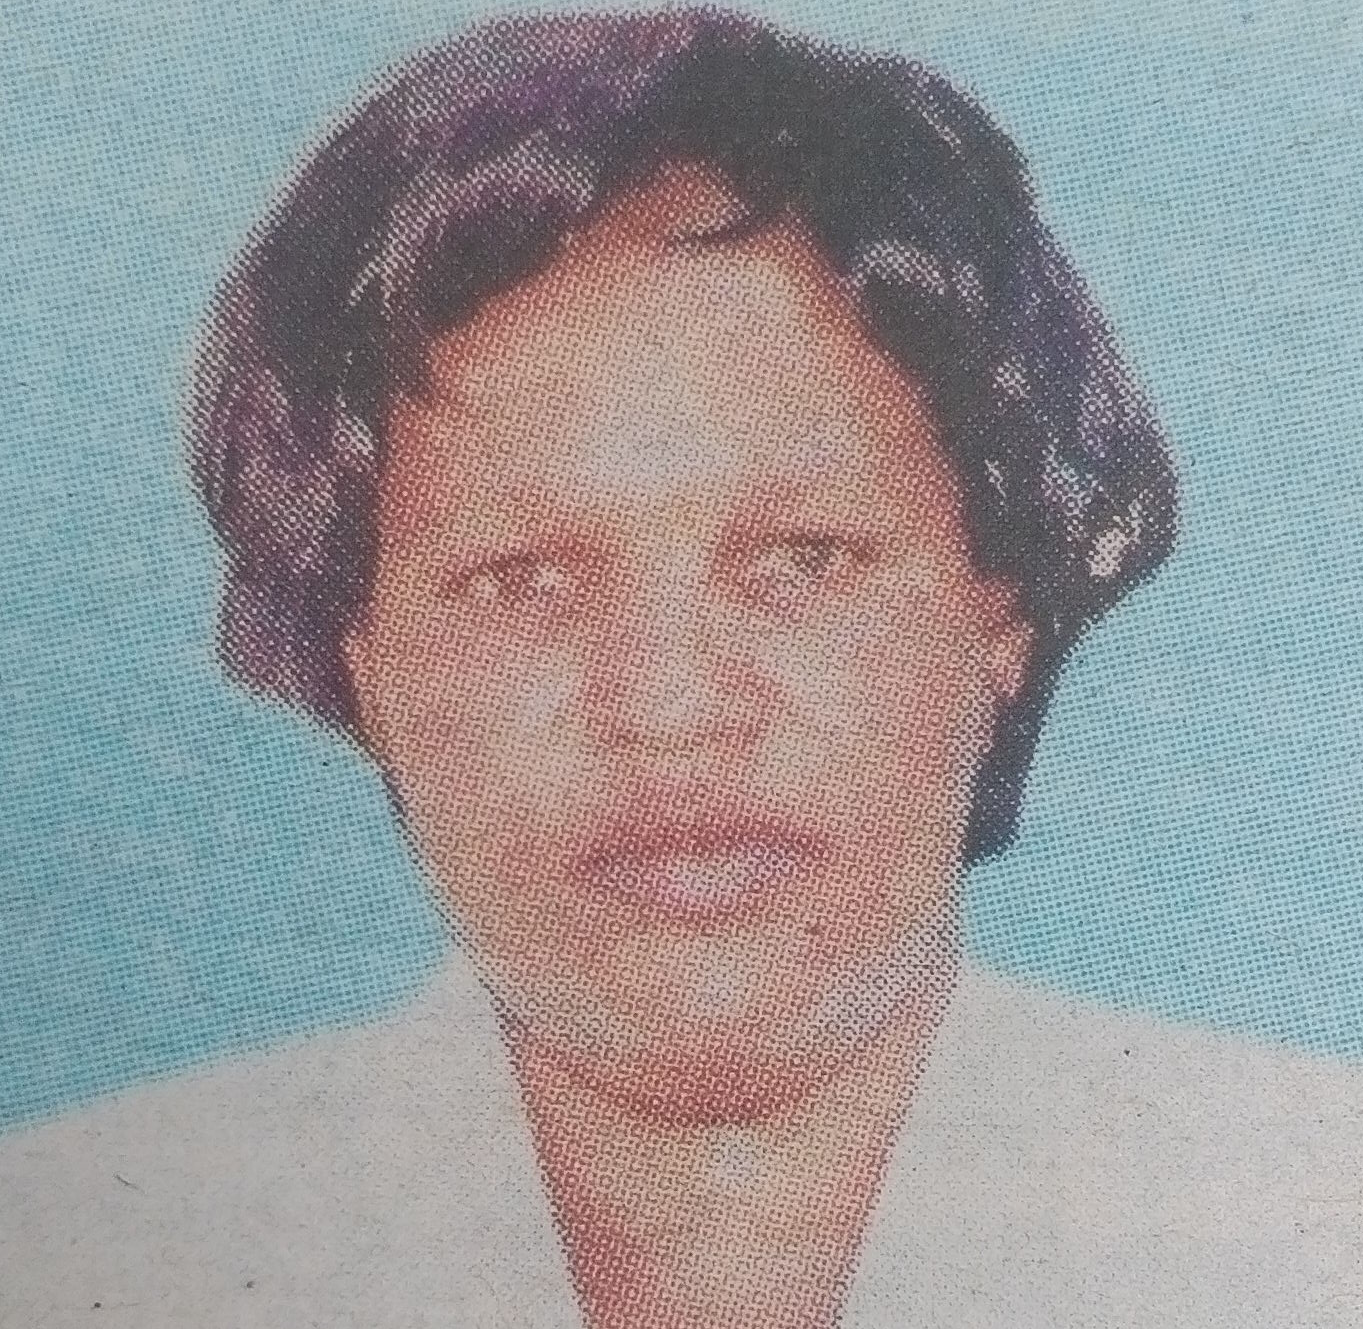 Obituary Image of Purity Njambi Andrew Kariuki